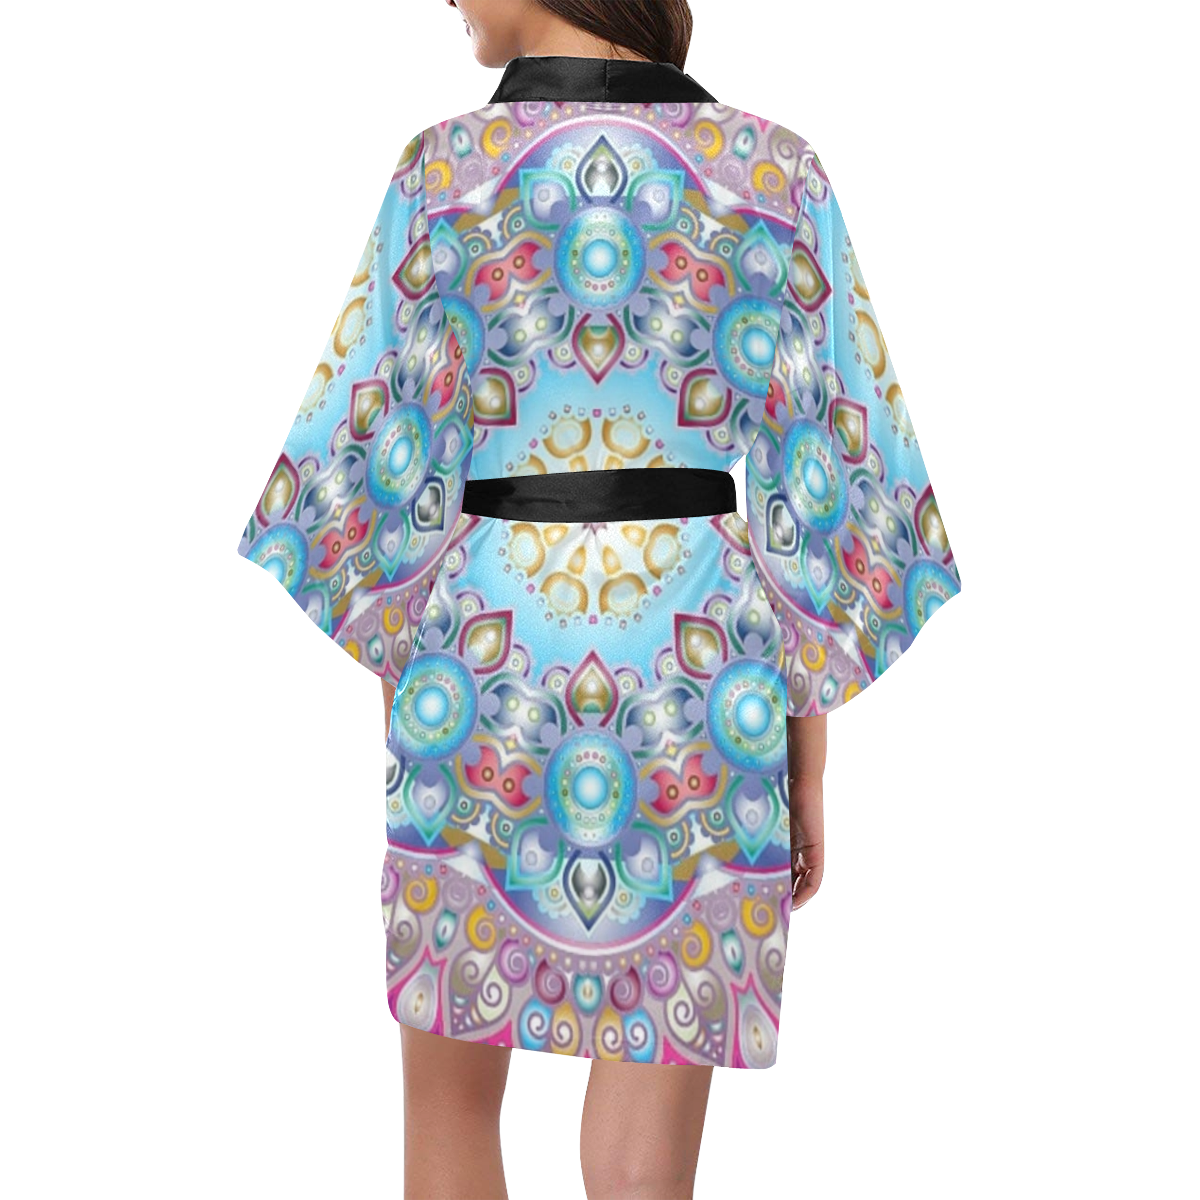 MANDALA DIAMONDS ARE FOREVER Kimono Robe